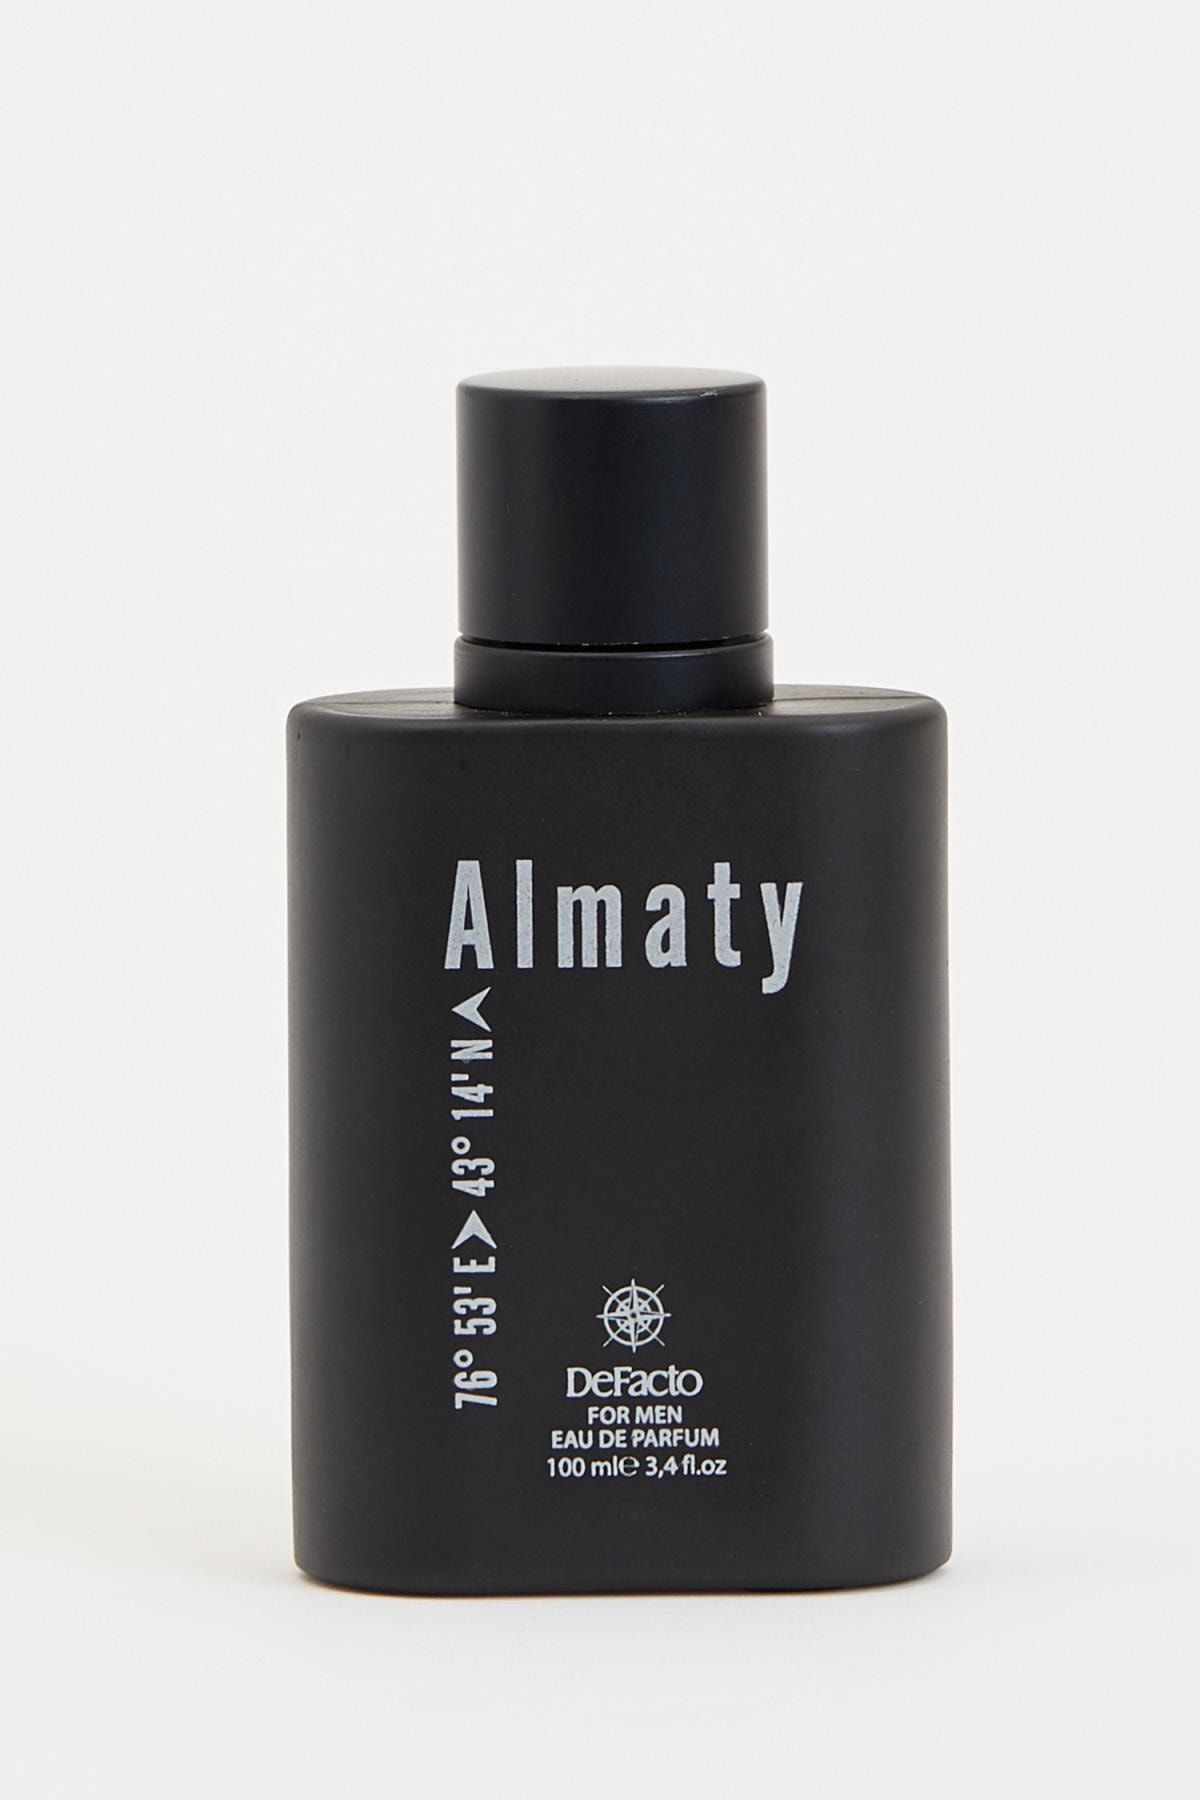 Defacto Erkek Almaty For Man Aromatik 100 ml Parfüm R4704aznsbk21